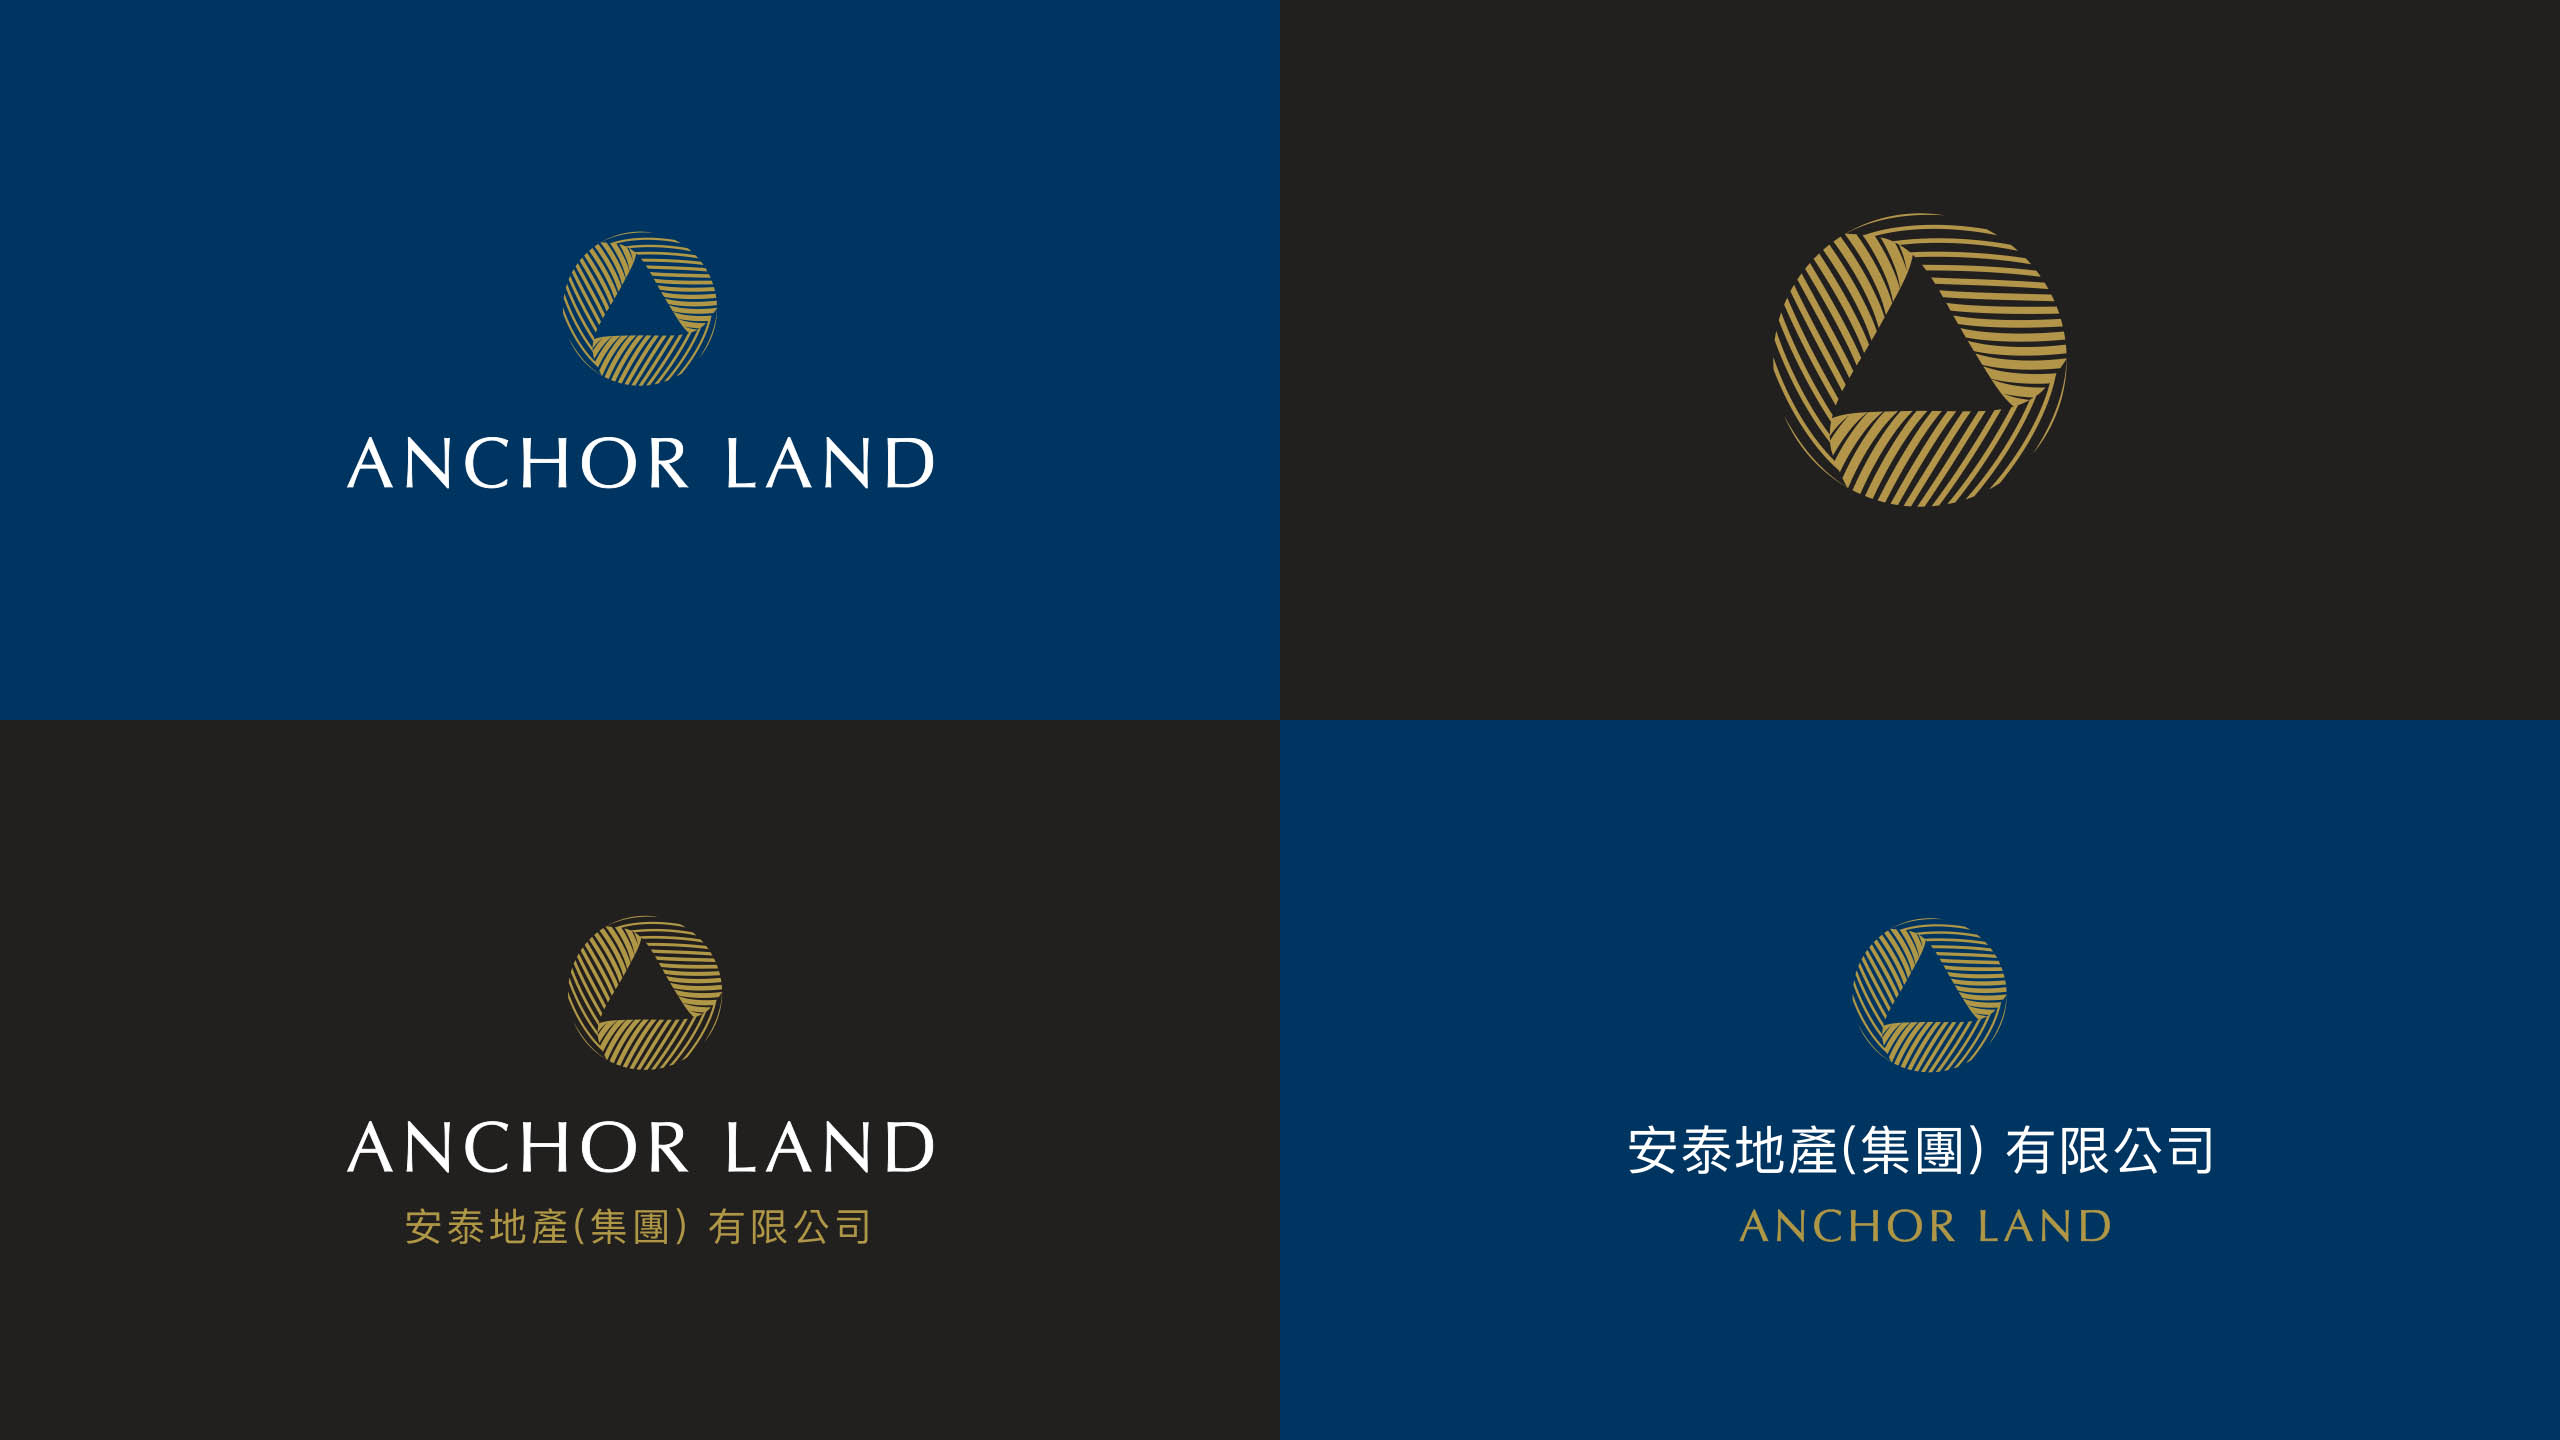 Geometric logo lockups and design for property developer brand Anchor Land